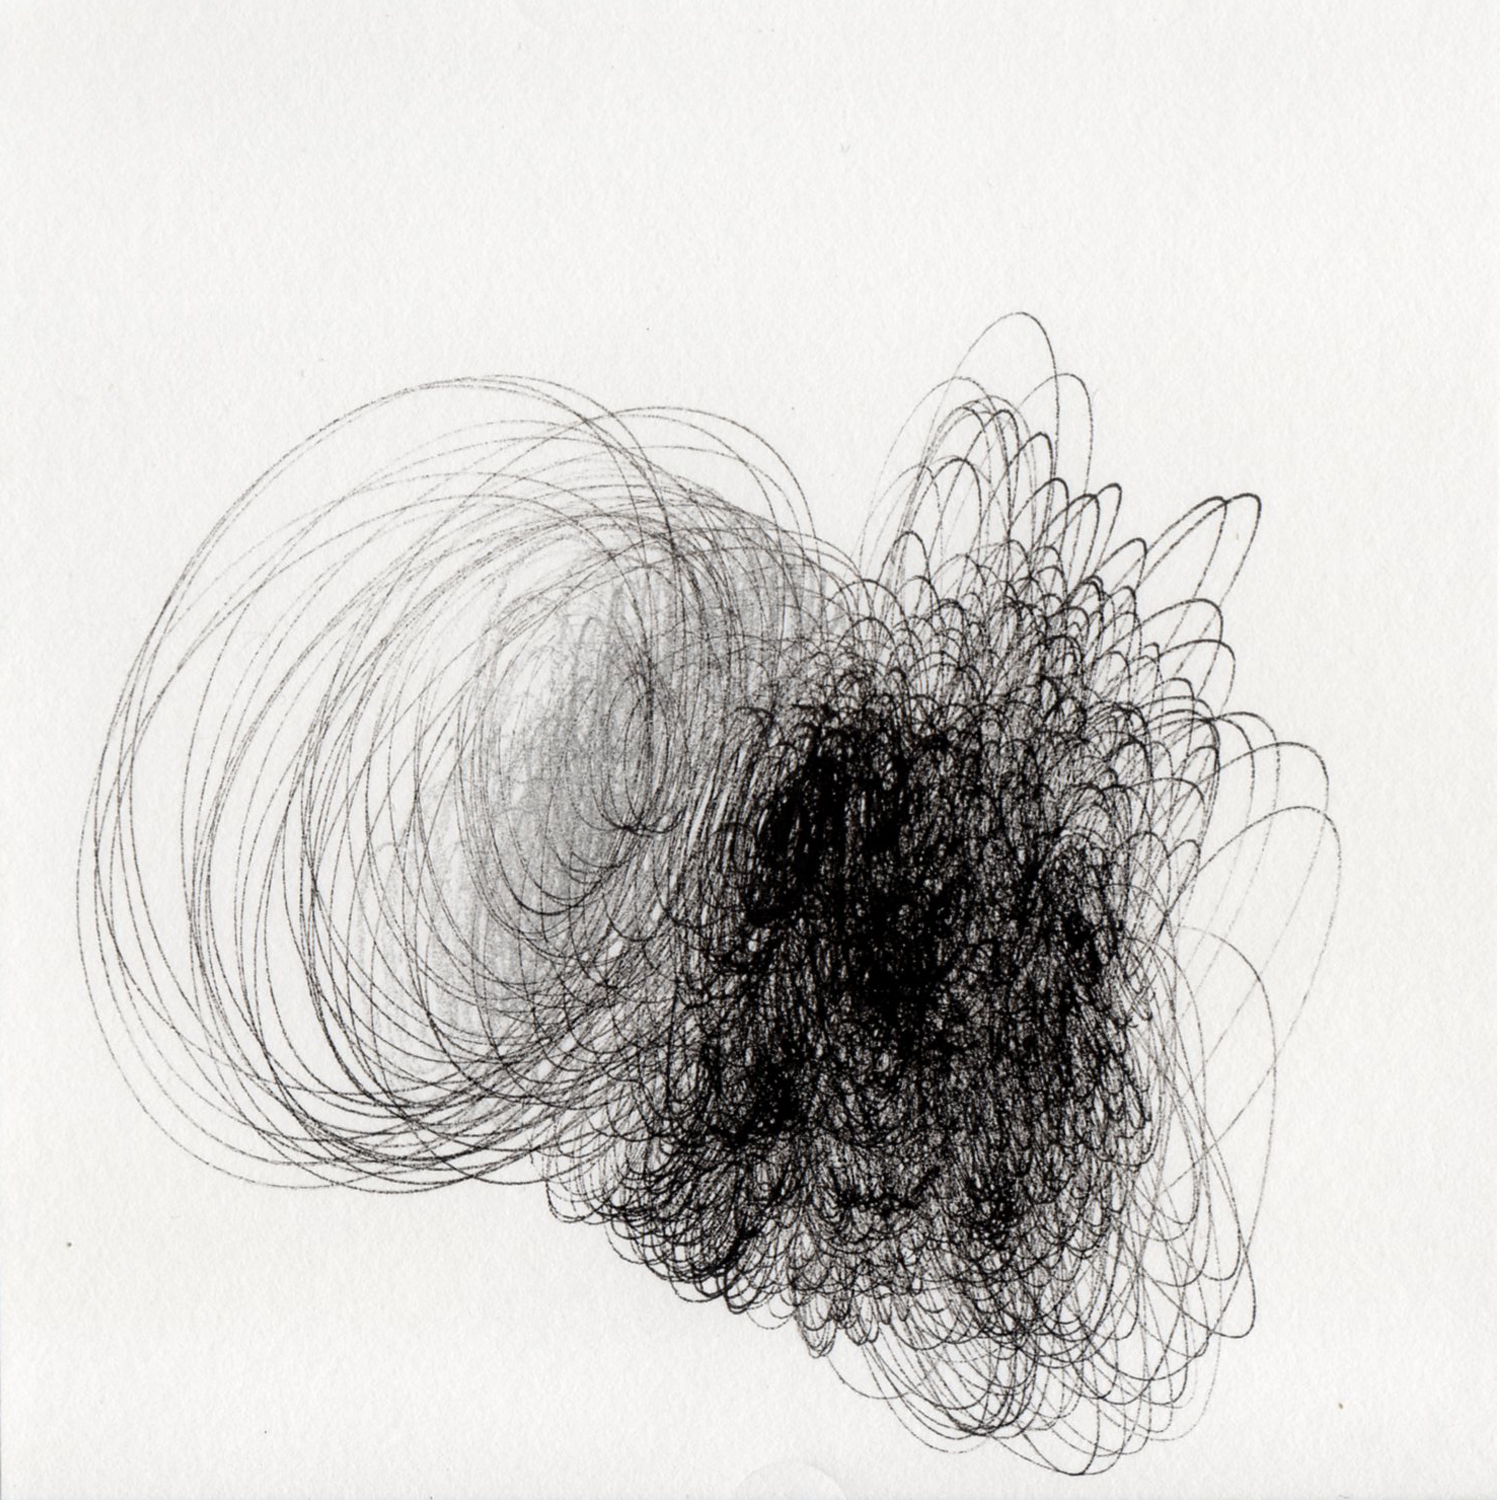   blob 2  pen on paper 5” x 5” 2014 